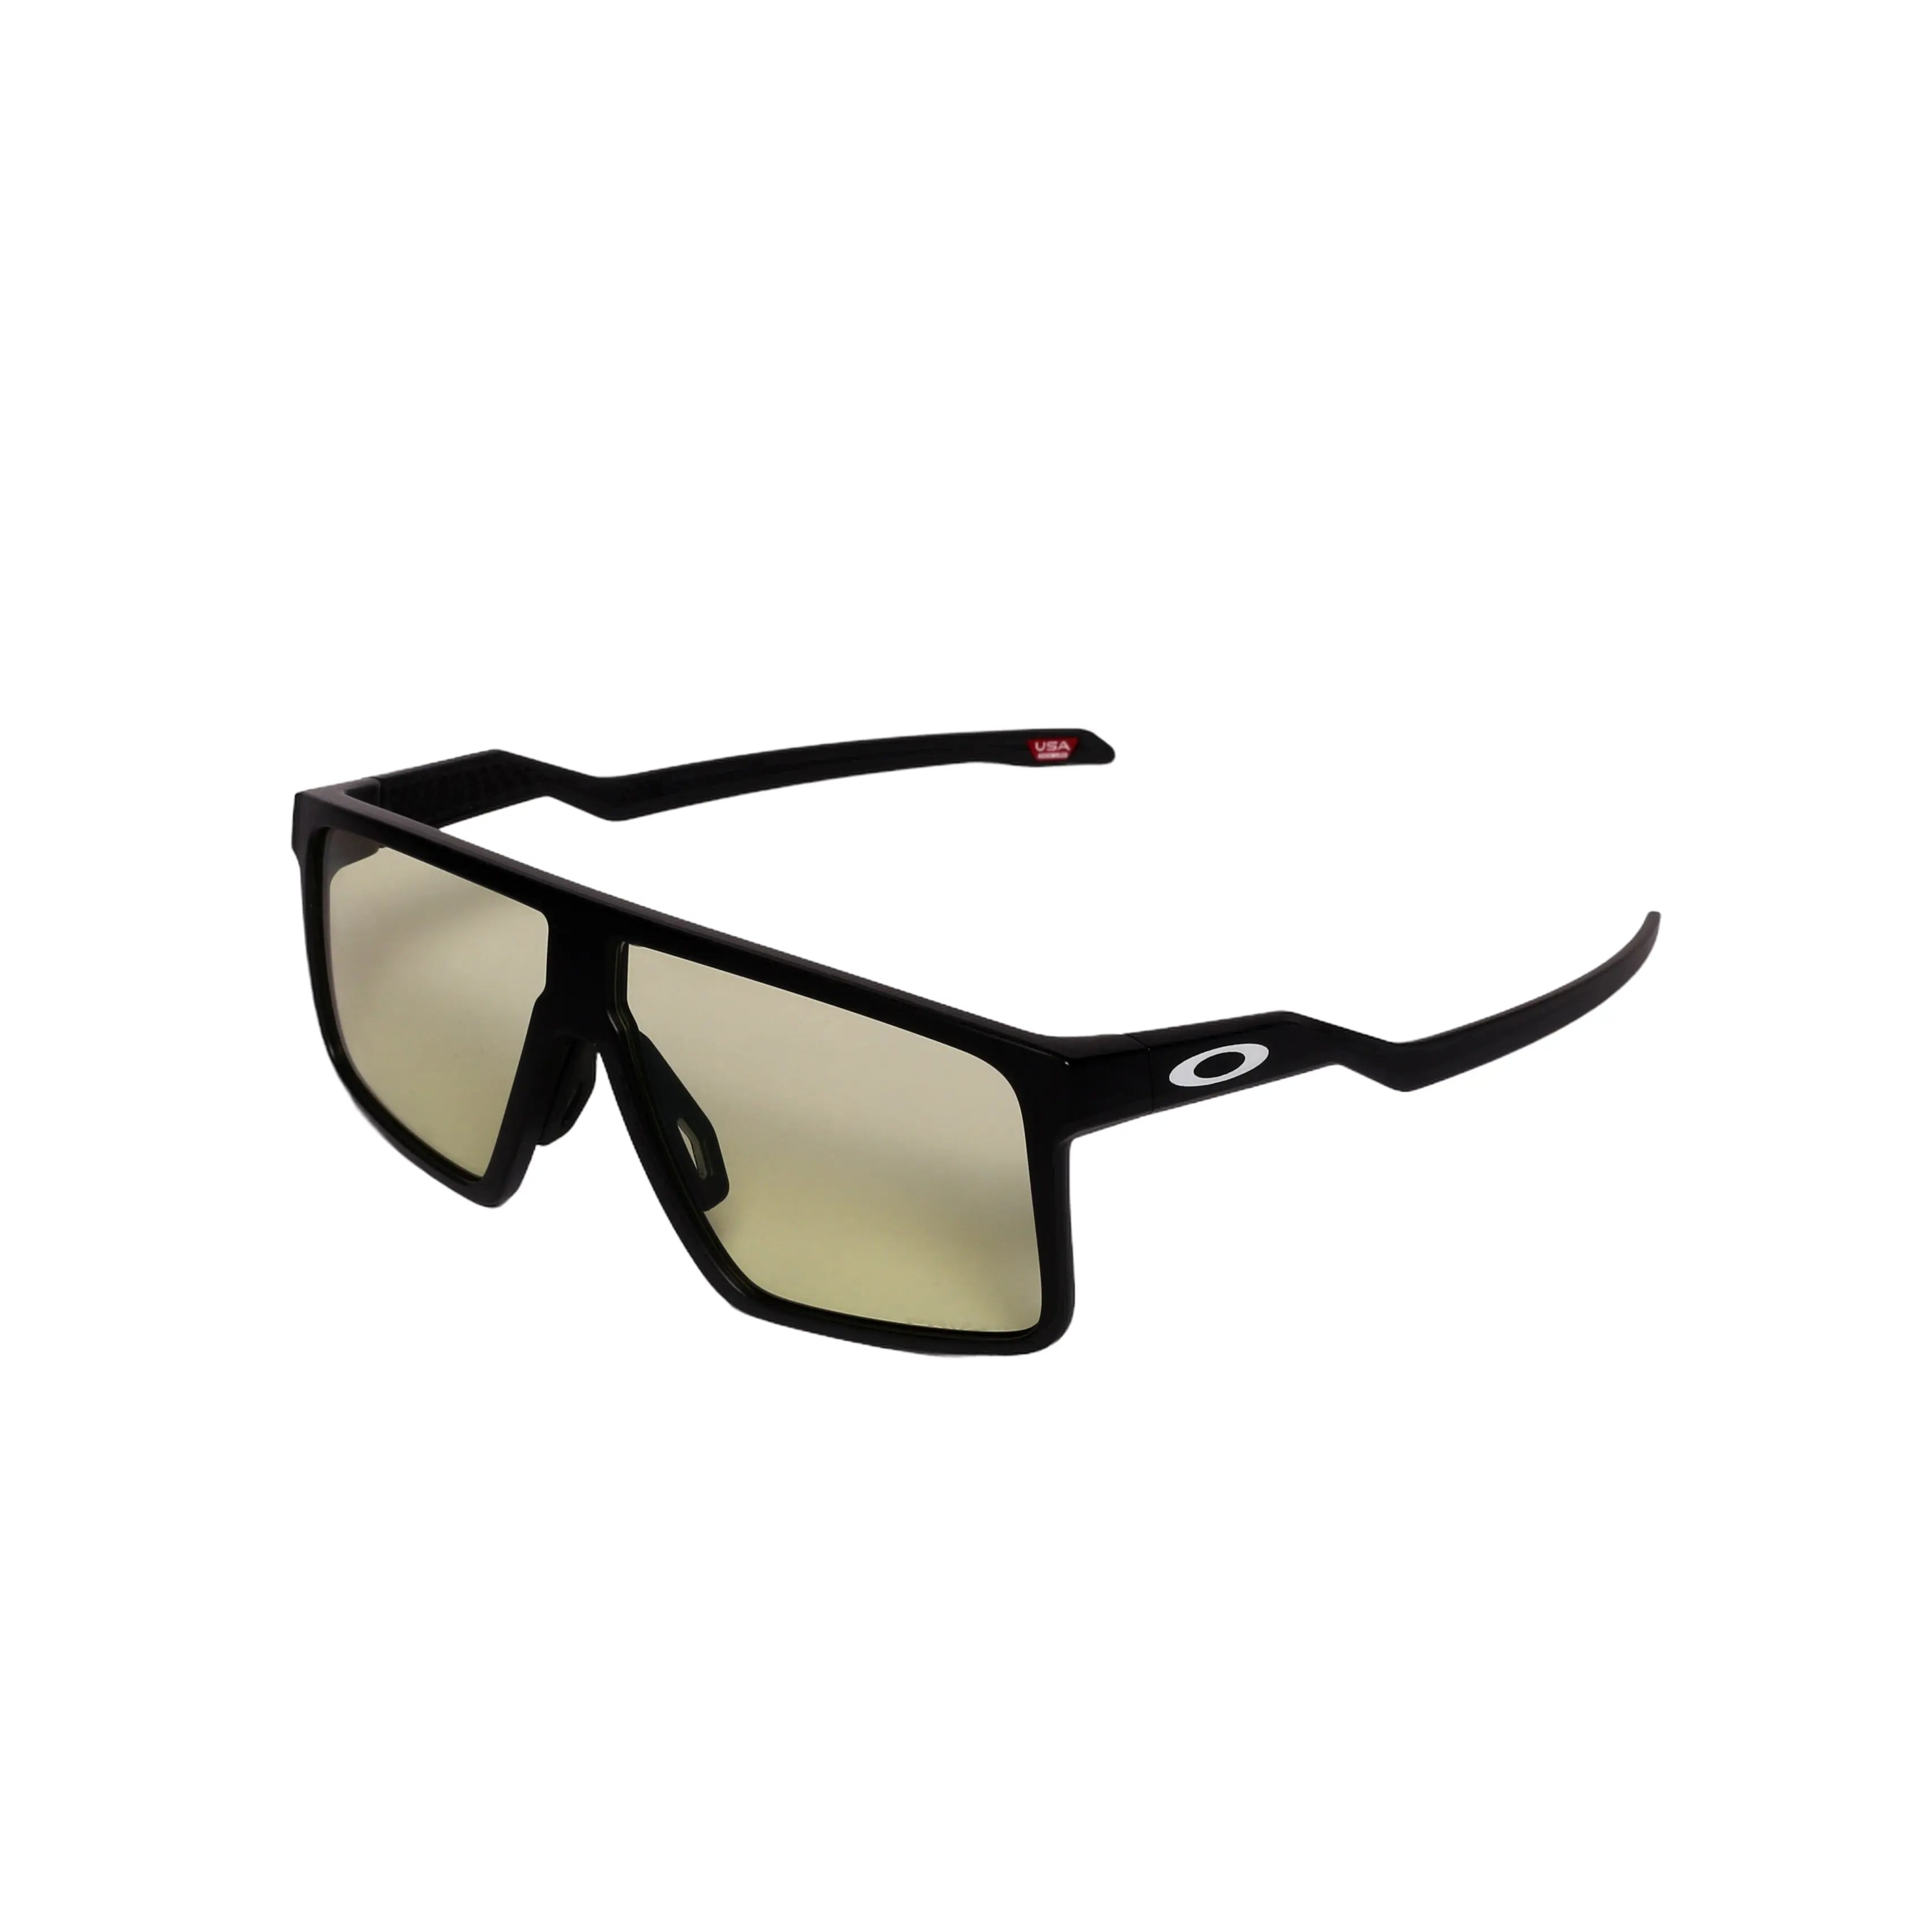 Oakley-OO9285-61-928501 Sunglasses - Premium Sunglasses from Oakley - Just Rs. 9490! Shop now at Laxmi Opticians